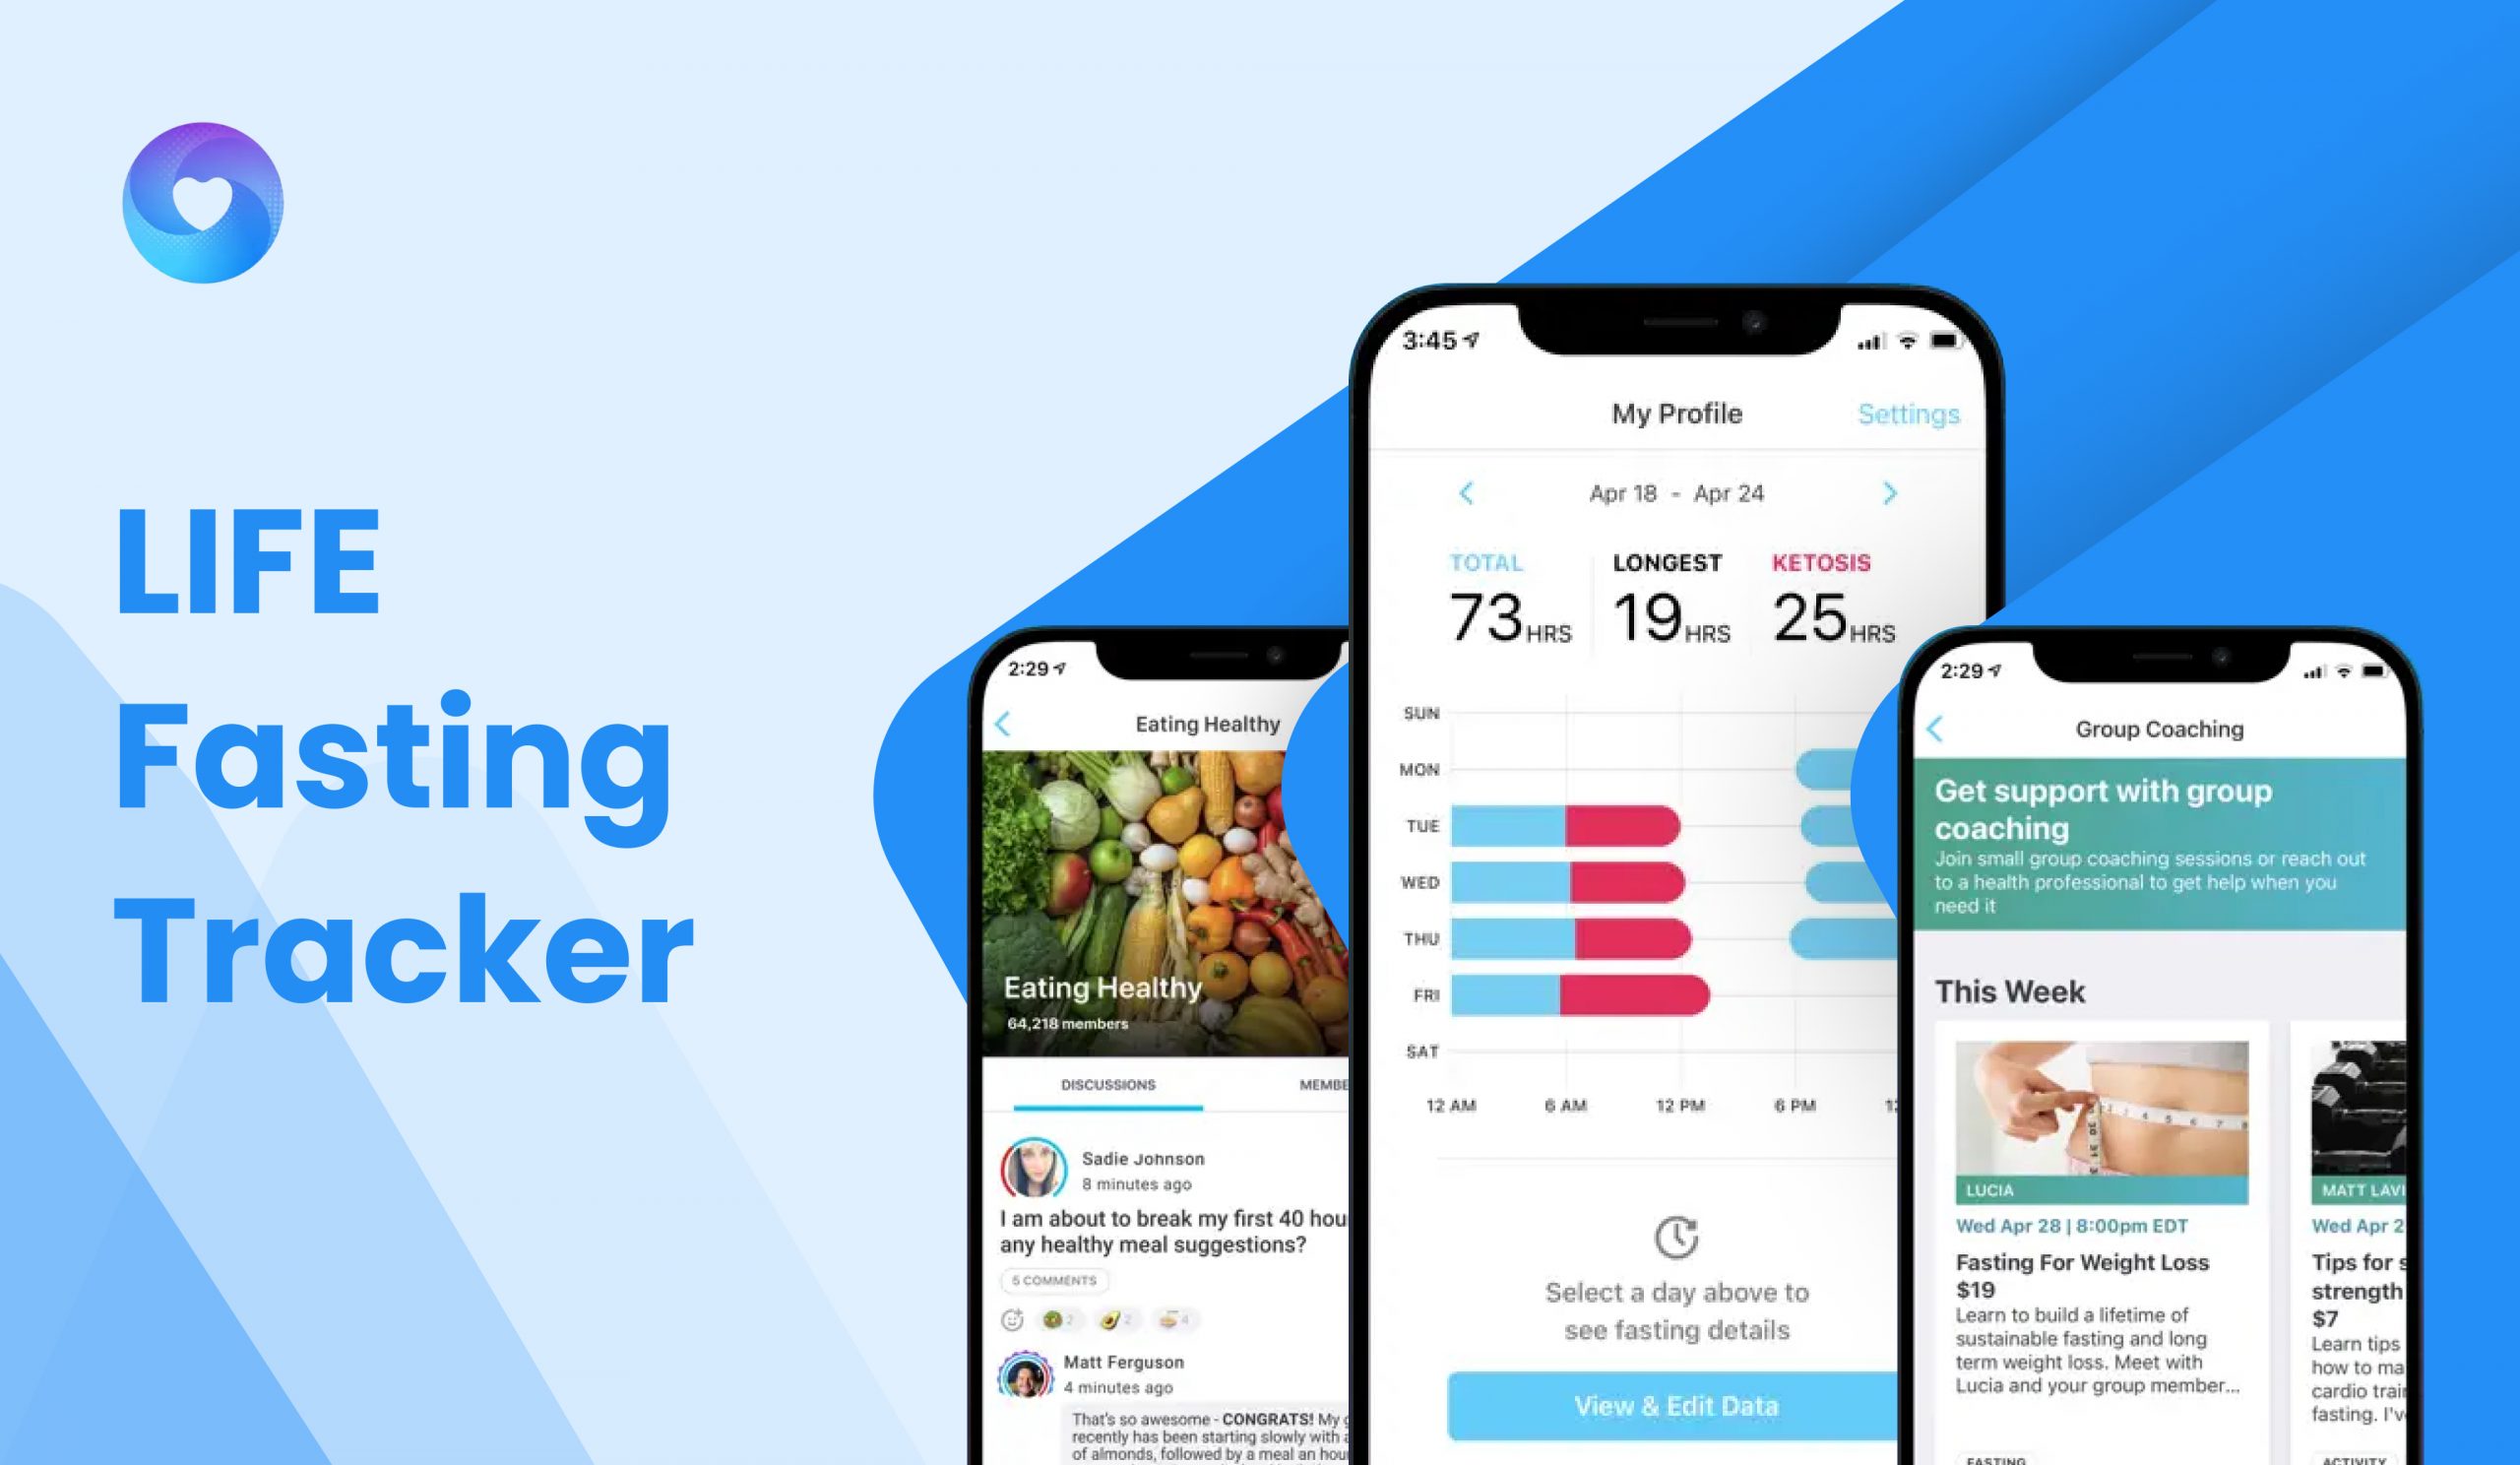 LIFE Fasting Tracker App